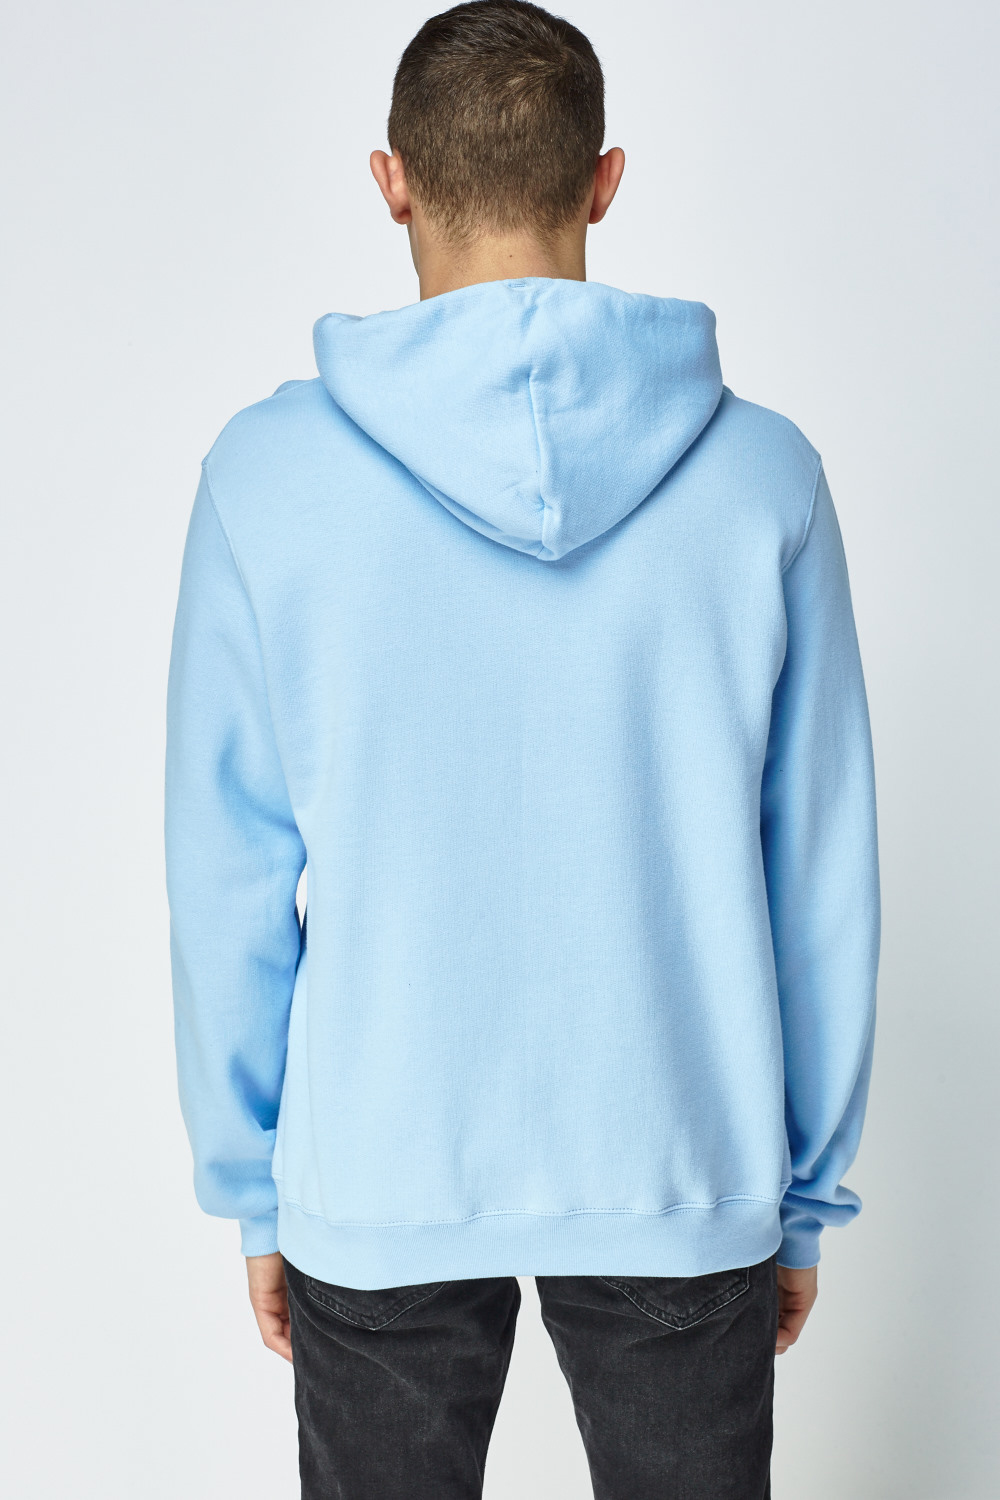 kawaii light blue sweatshirt